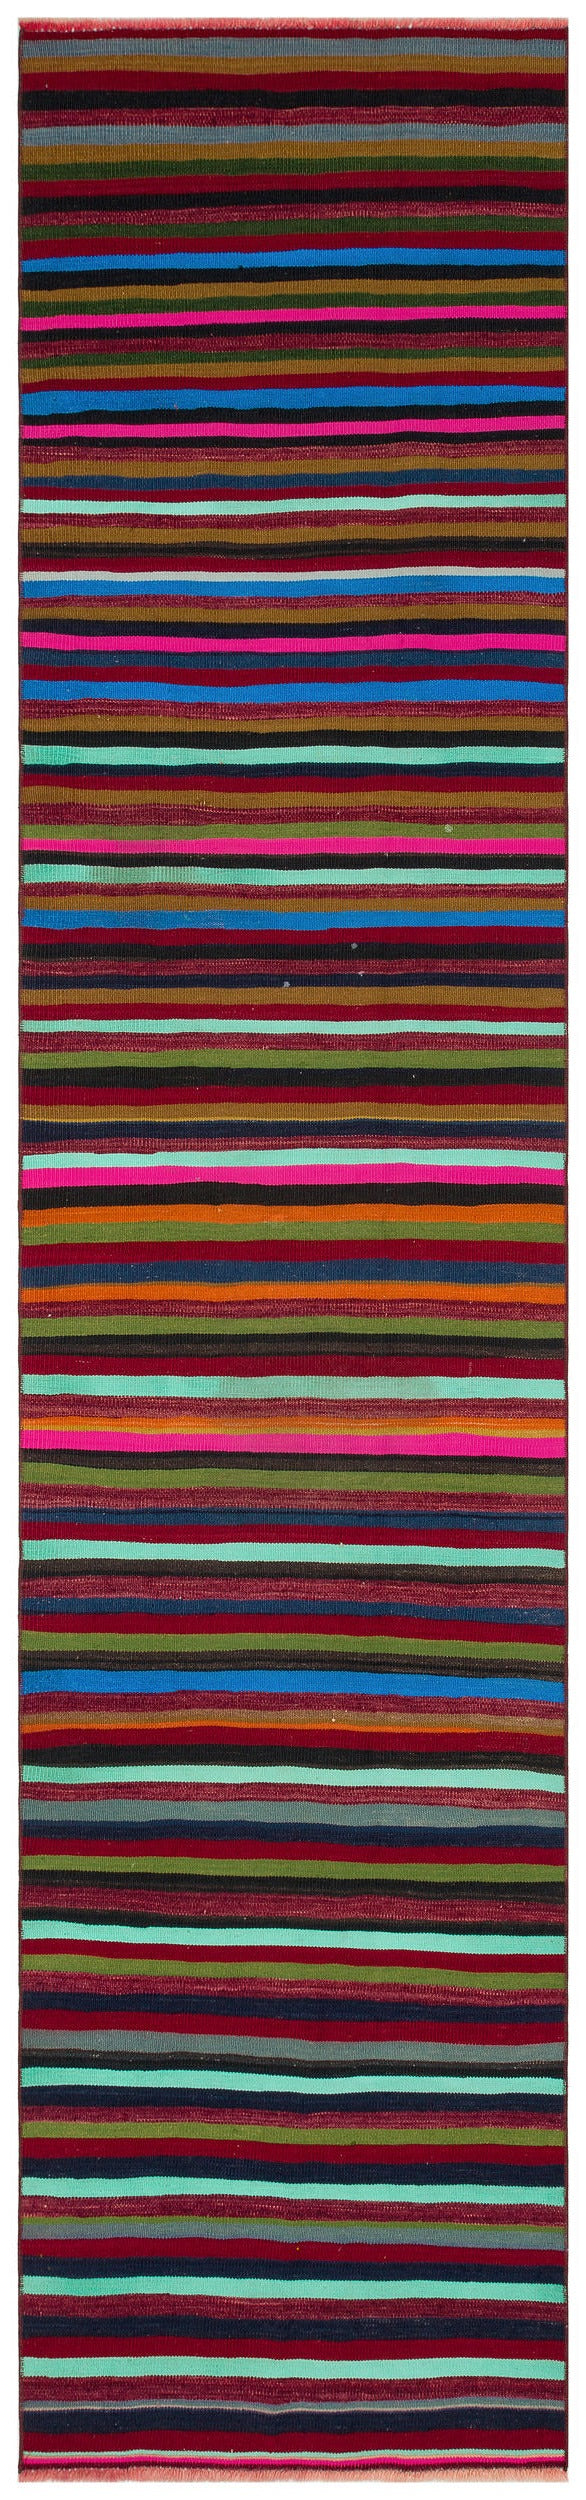 Cretan Red Striped Wool Hand-Woven Carpet 080 x 341